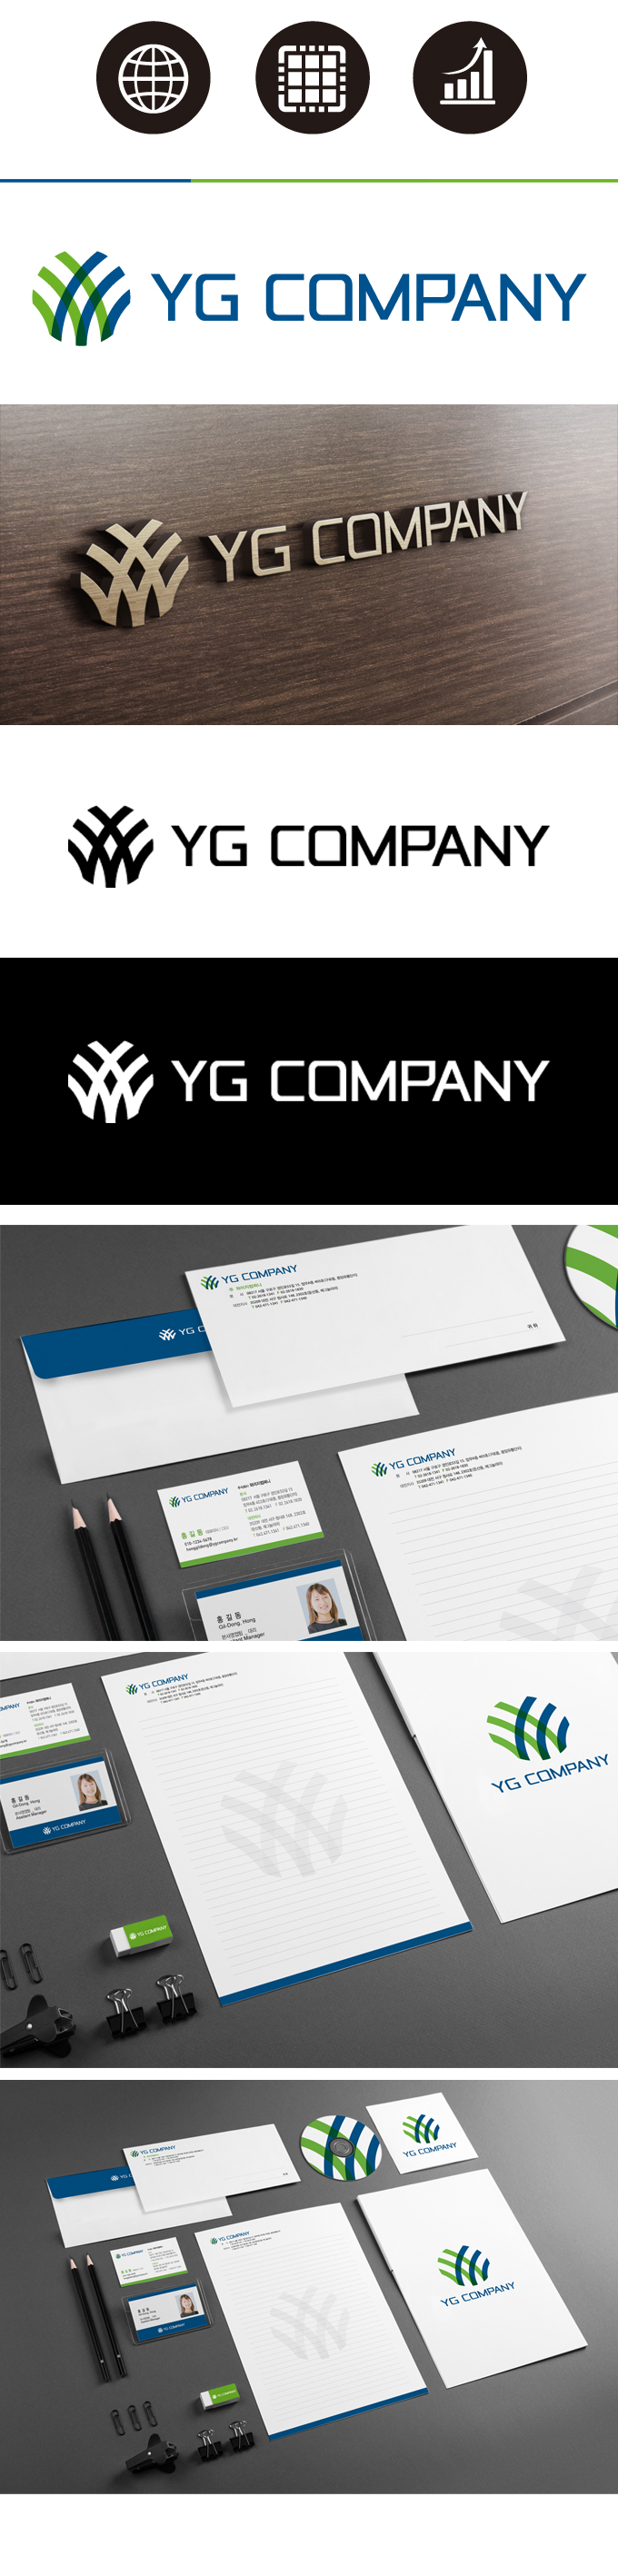 YG-company-brand